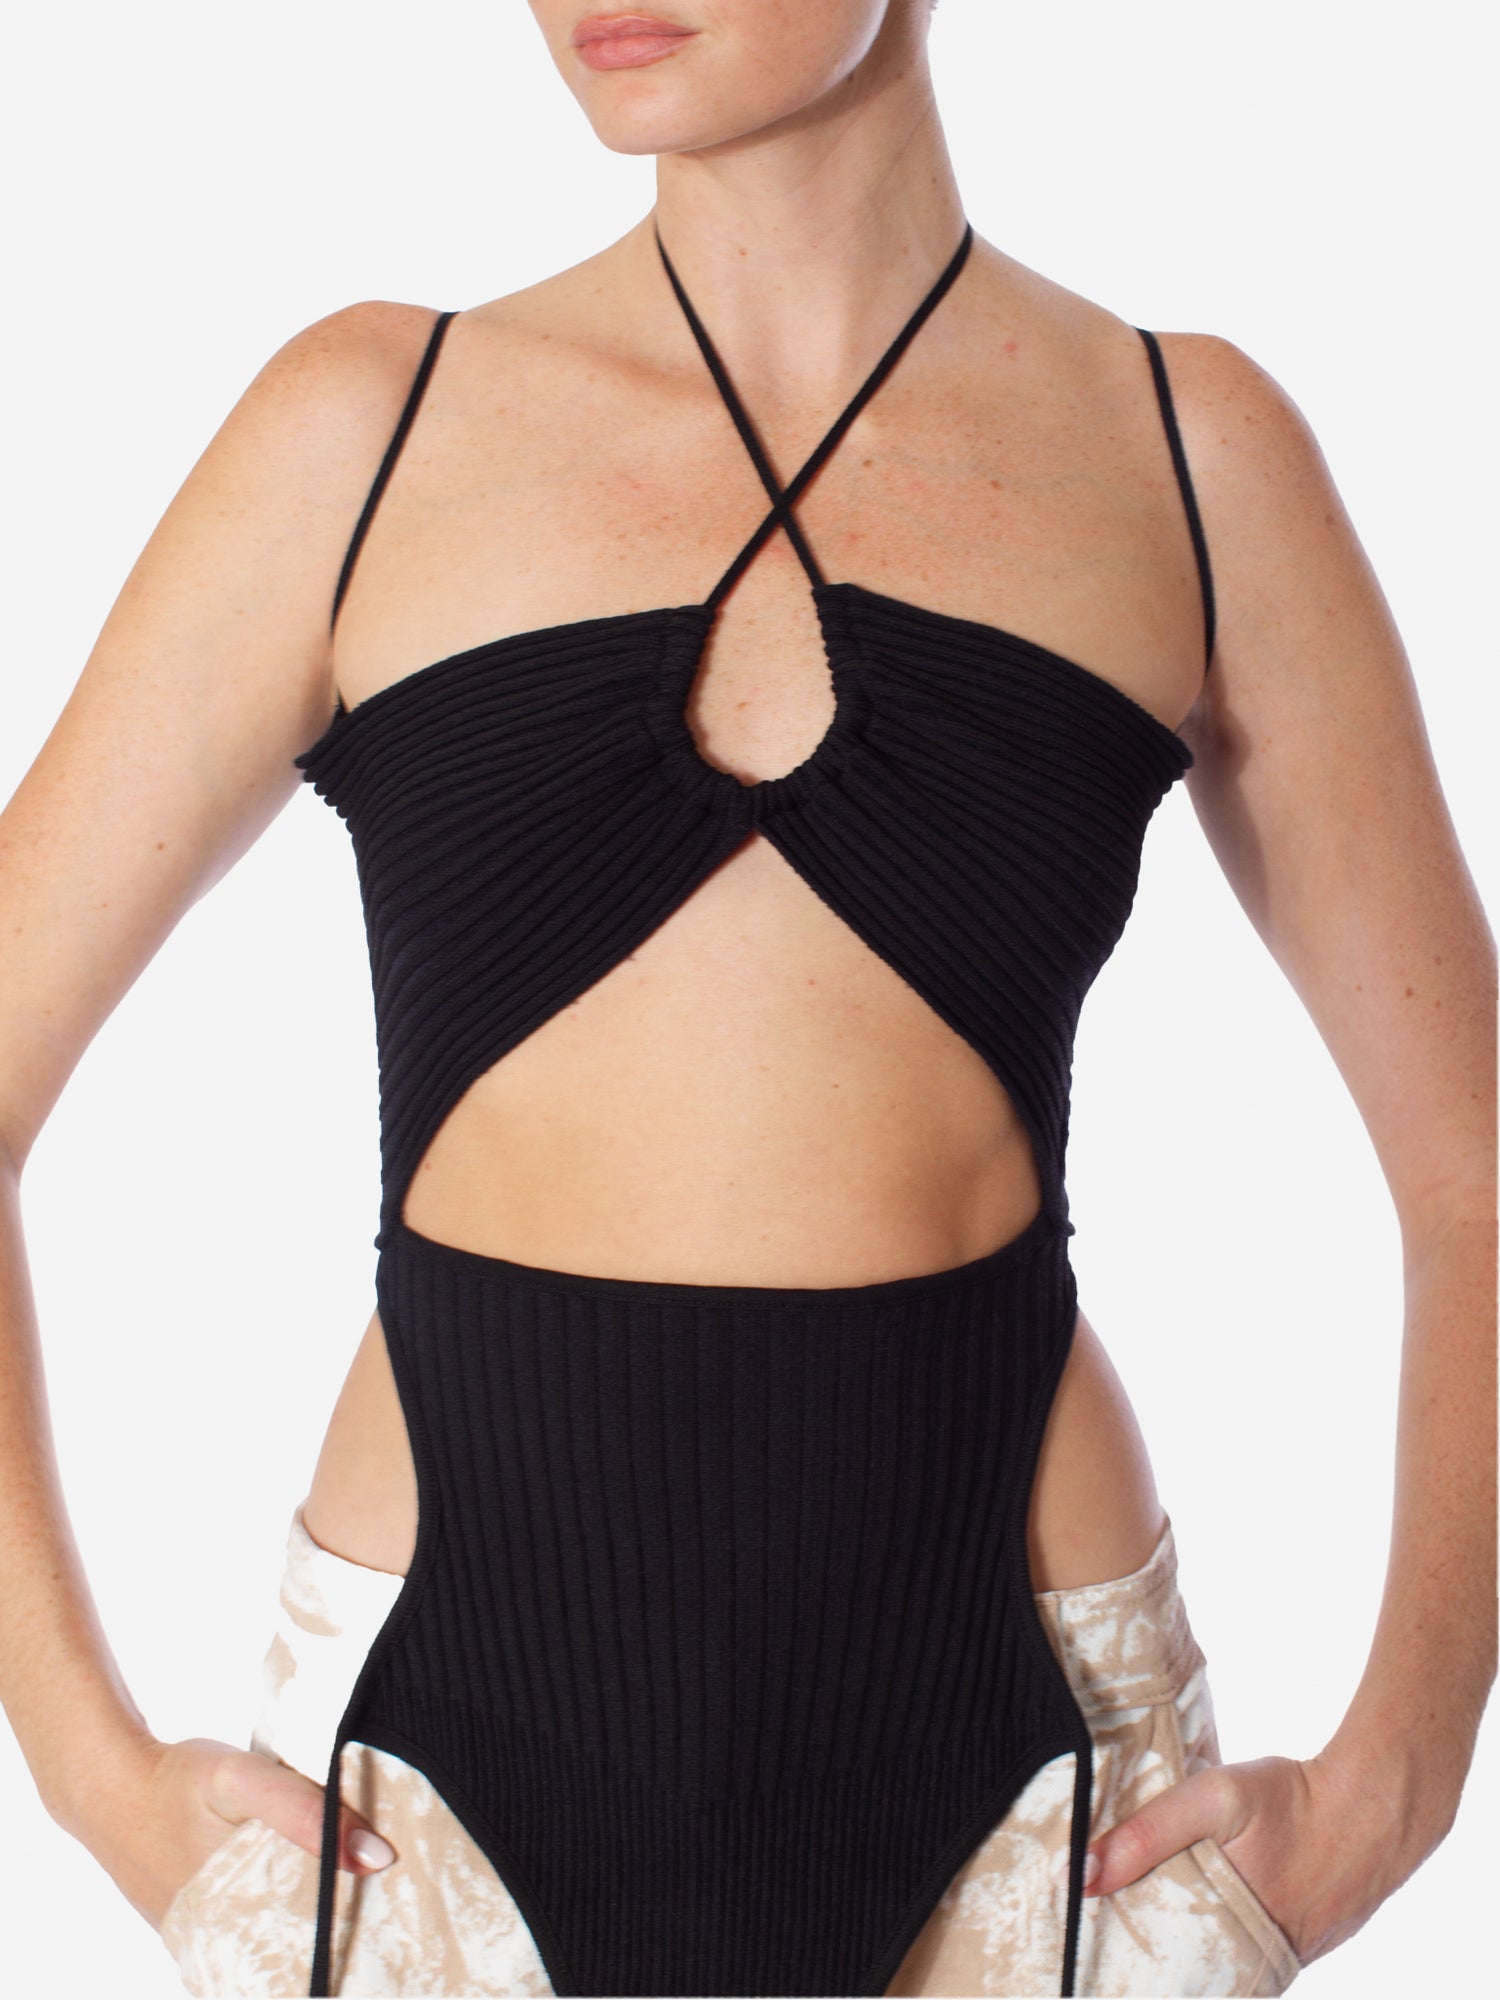 ANDREĀDAMO cut-out Stretch Bodysuit - Farfetch  Cutout bodysuit, Black  bodysuit, Bodysuit designs